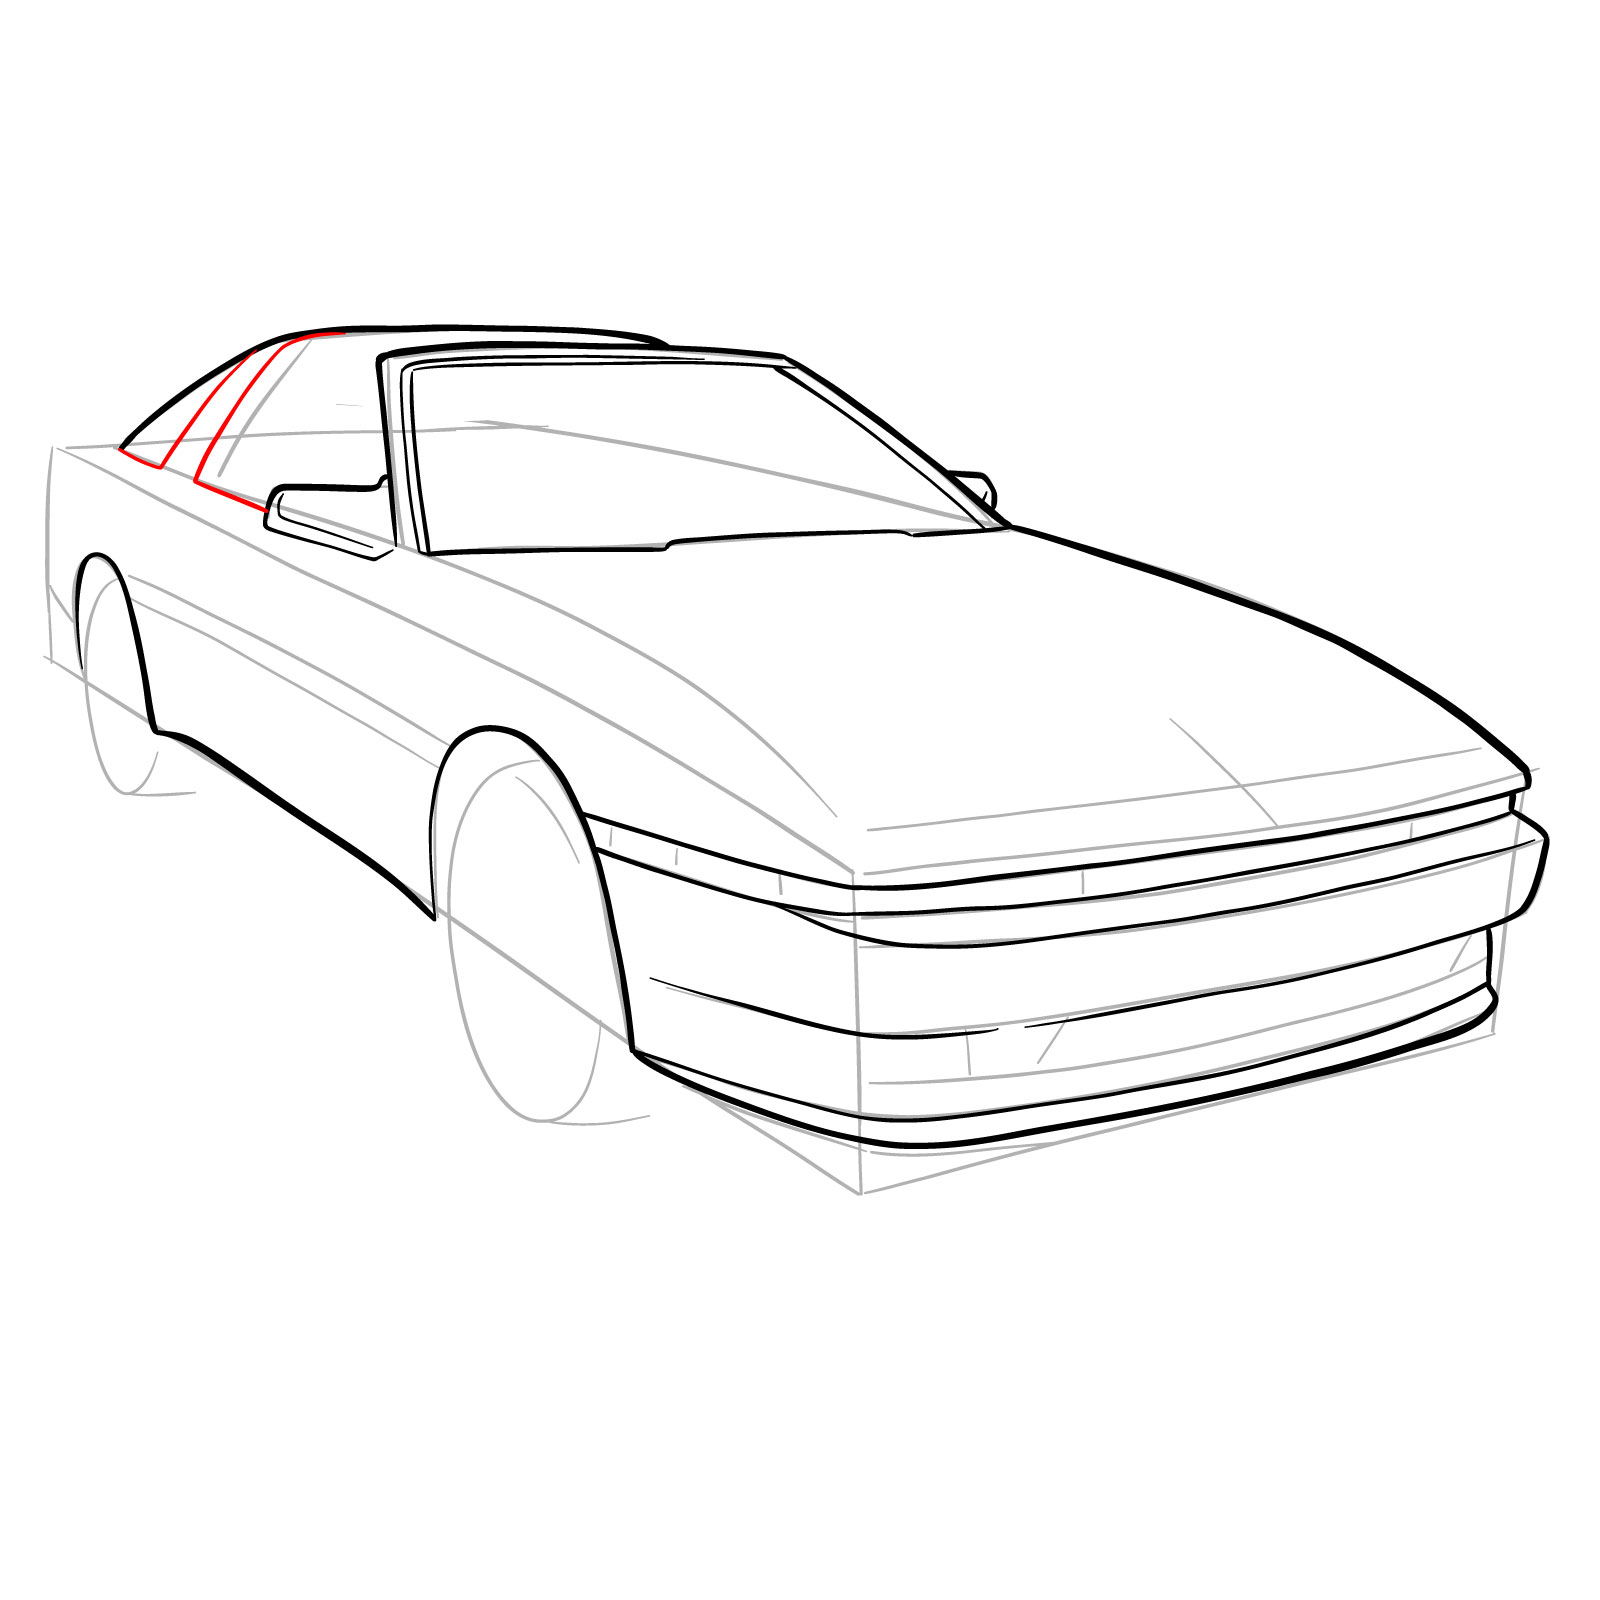 How to draw a 1988 Toyota Supra Turbo MK 3 - SketchOk